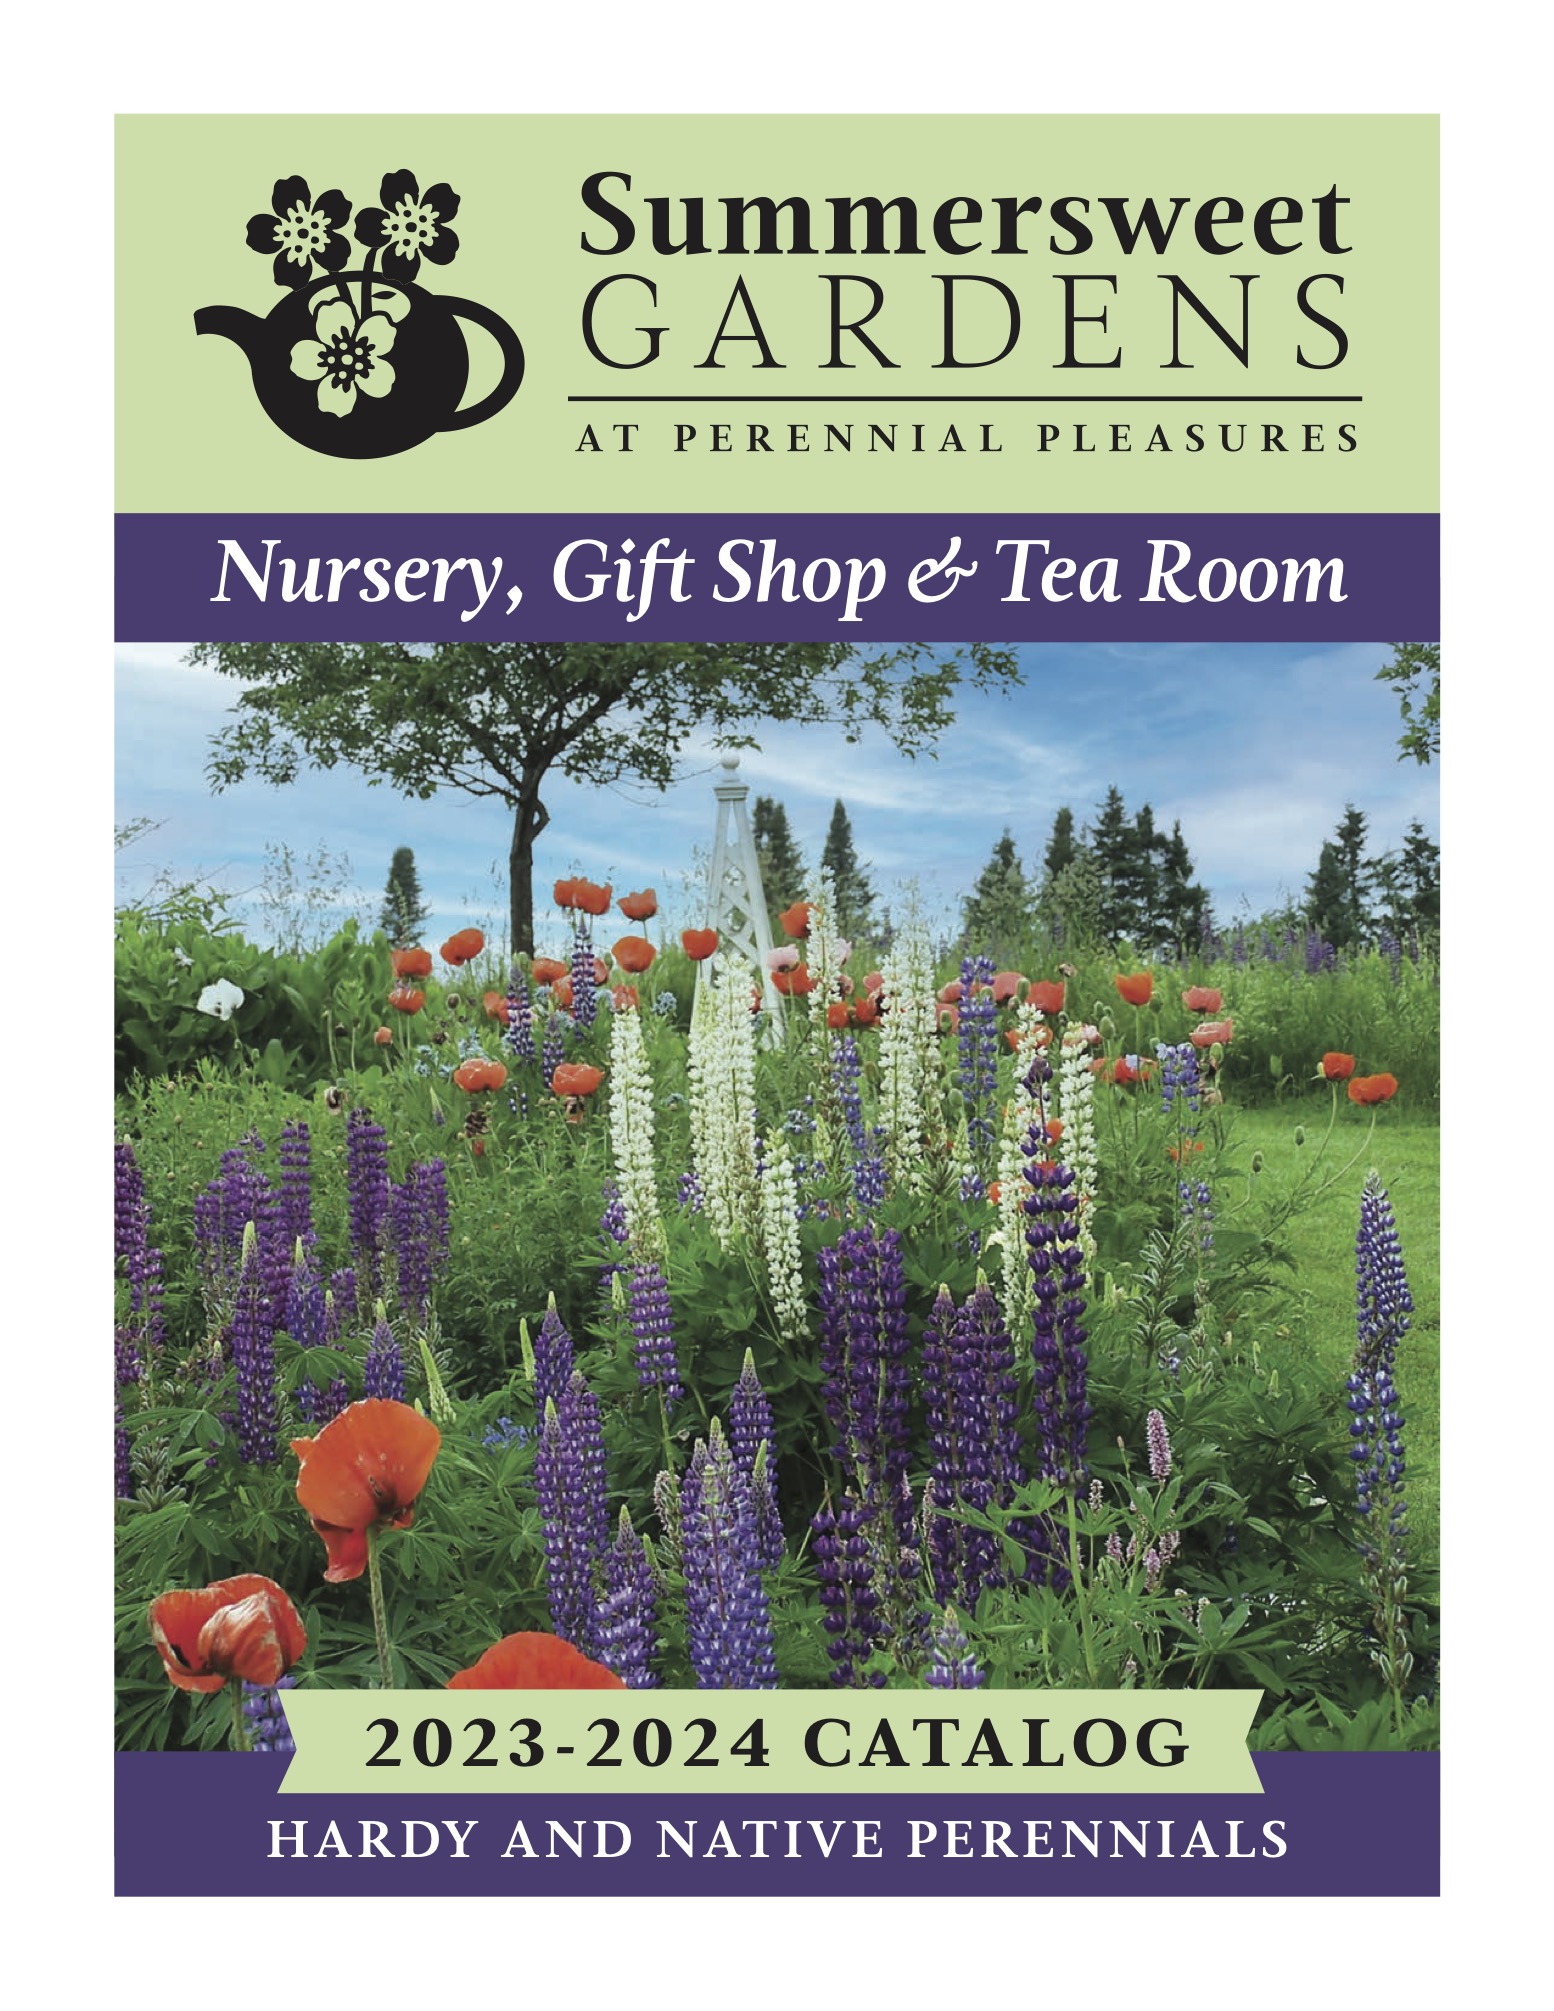 summersweet-gardens-perennial-pleasures-nursery-gift-shop-catalog